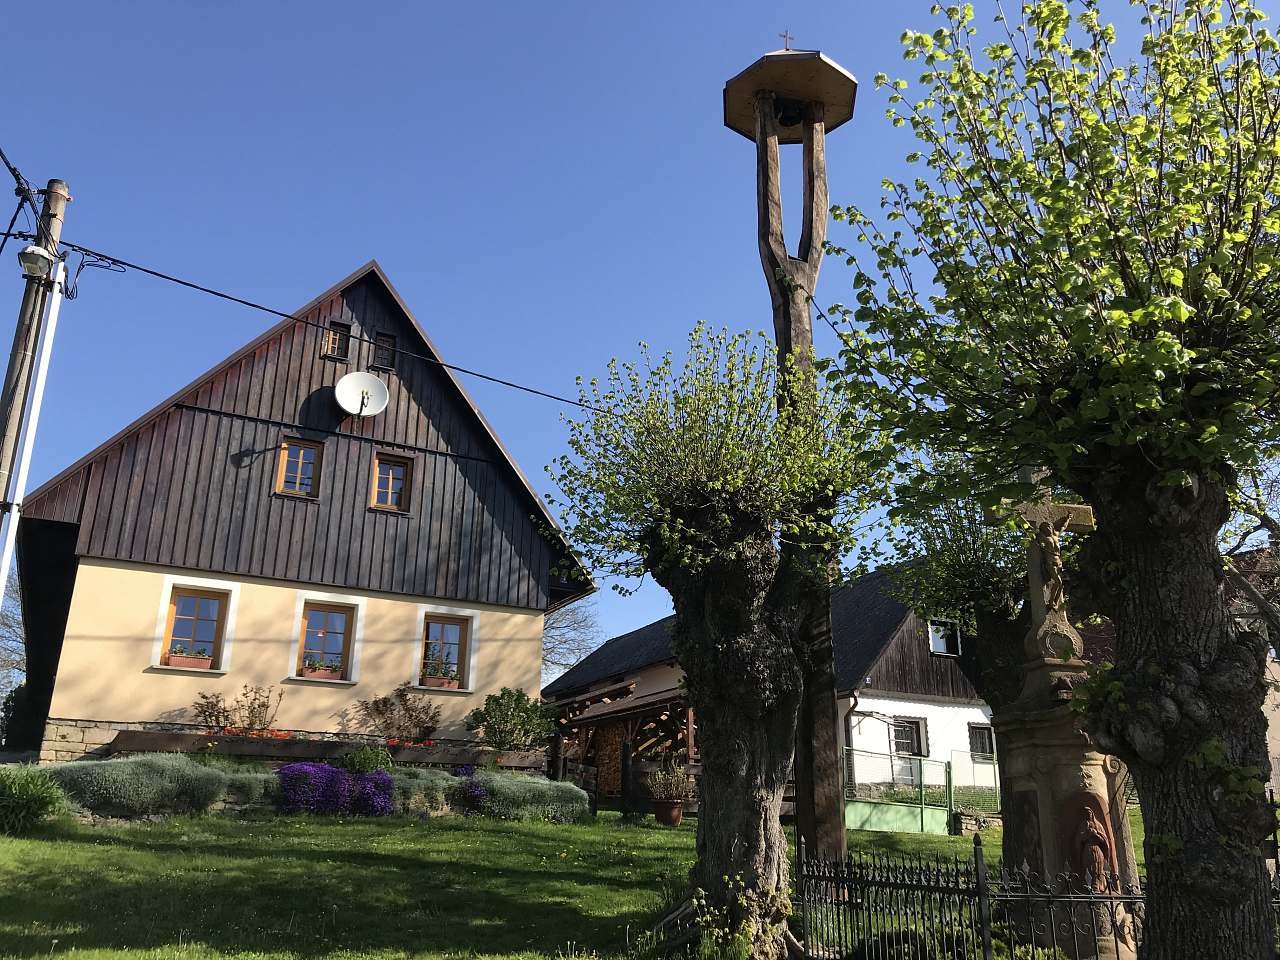 Hütte am Glockenturm